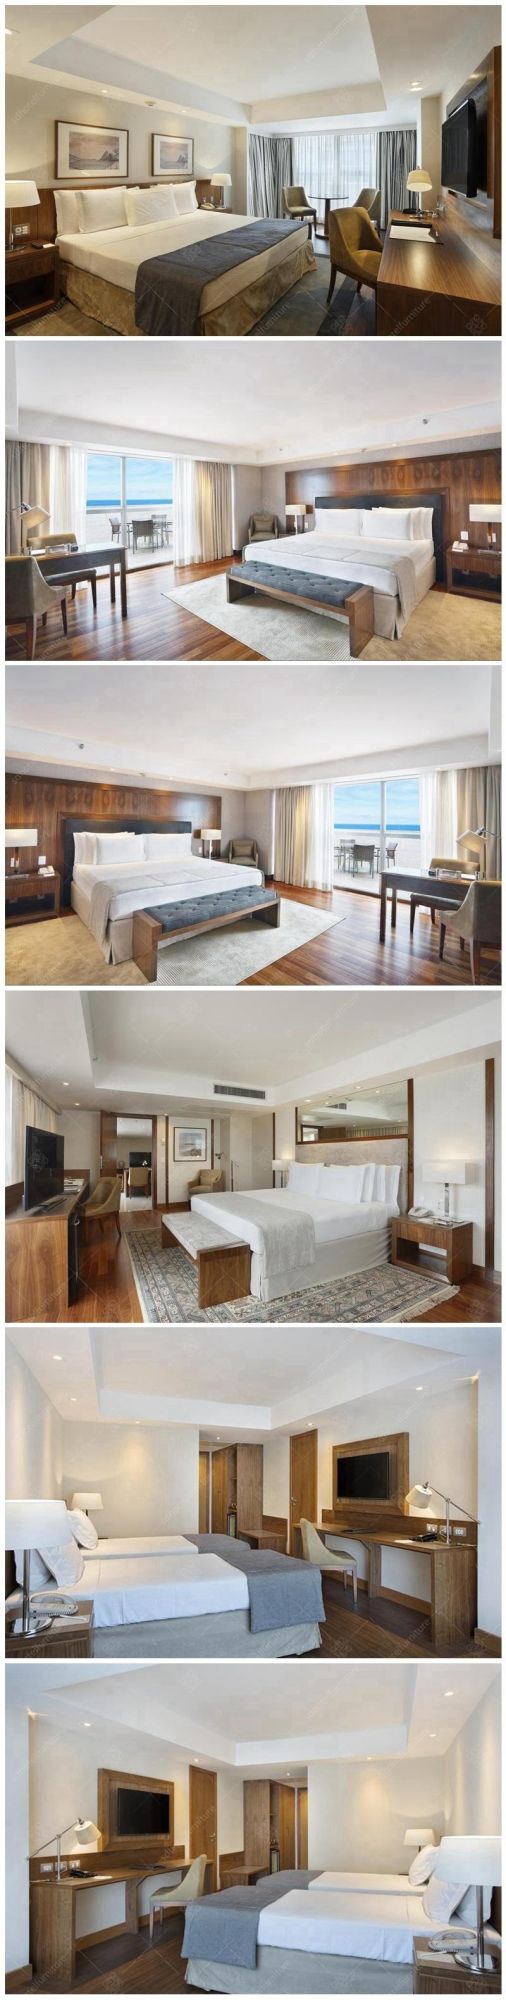 Modern 5 Stars Resort Hotel Bedroom Furniture Commercial Use Natual Wood Grain